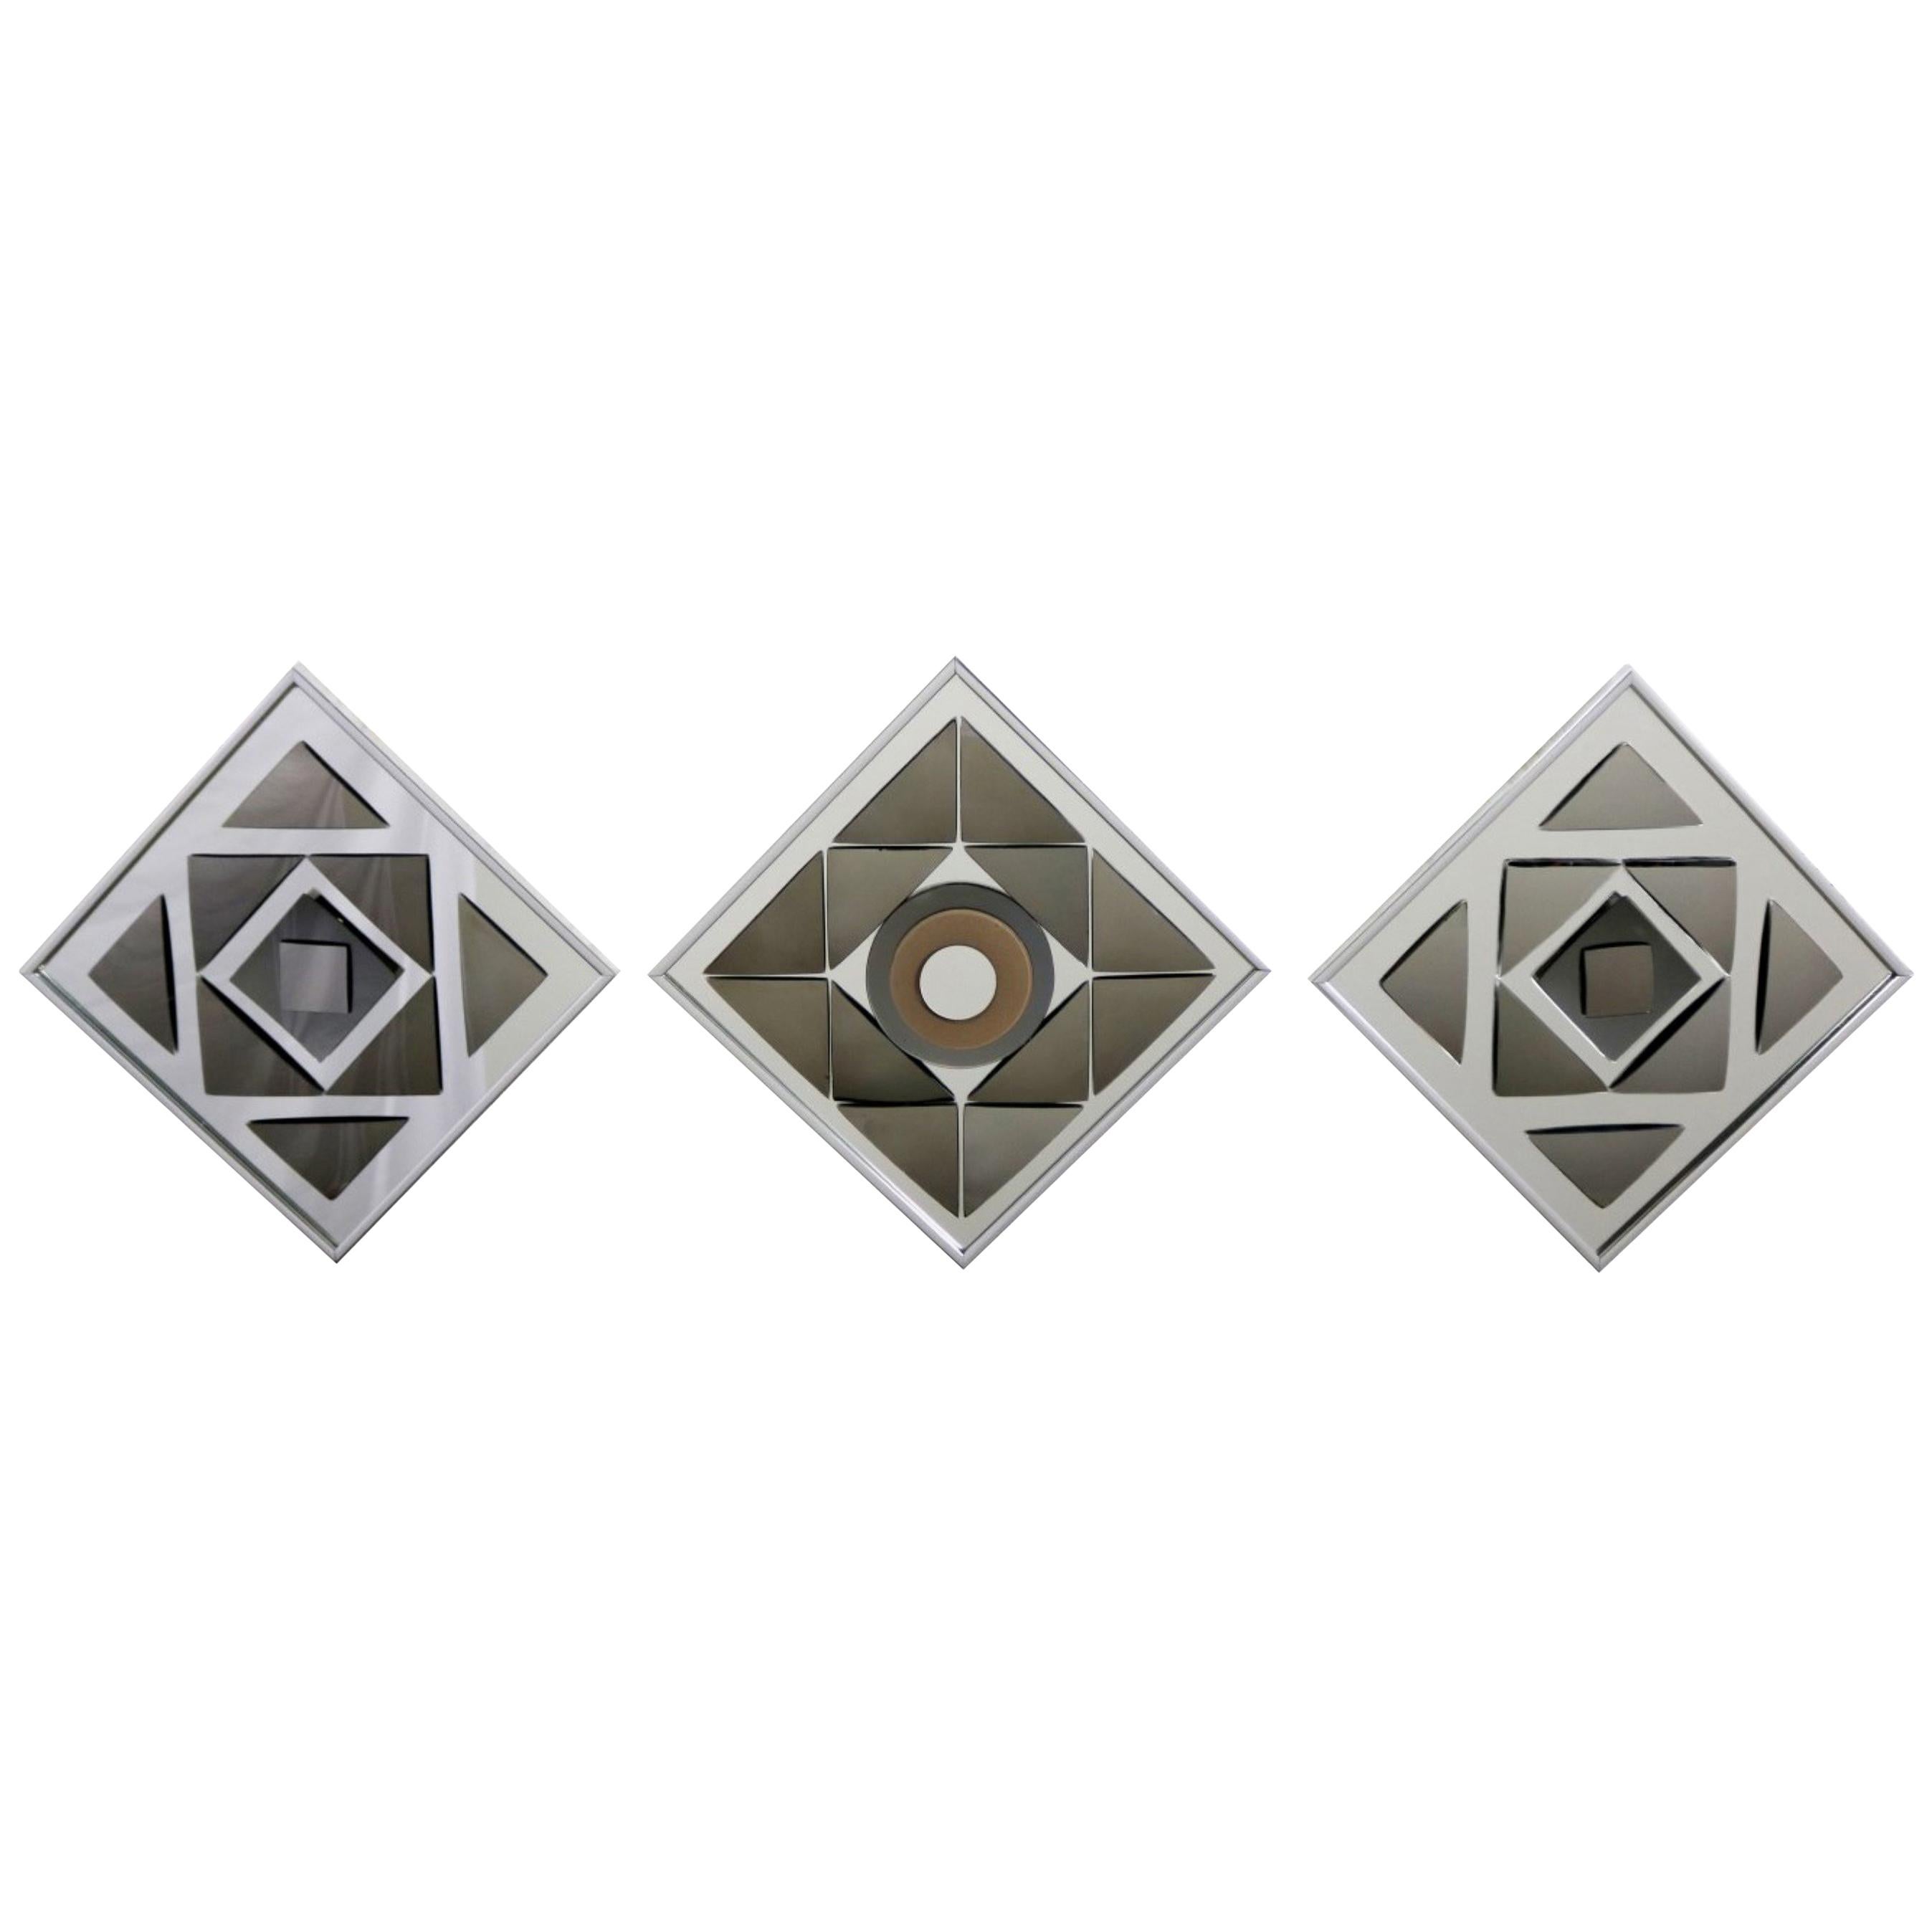 Pop Art Op Art Geometric Trio of Framed Mirror Wall Sculptures by Hal Bienenfeld